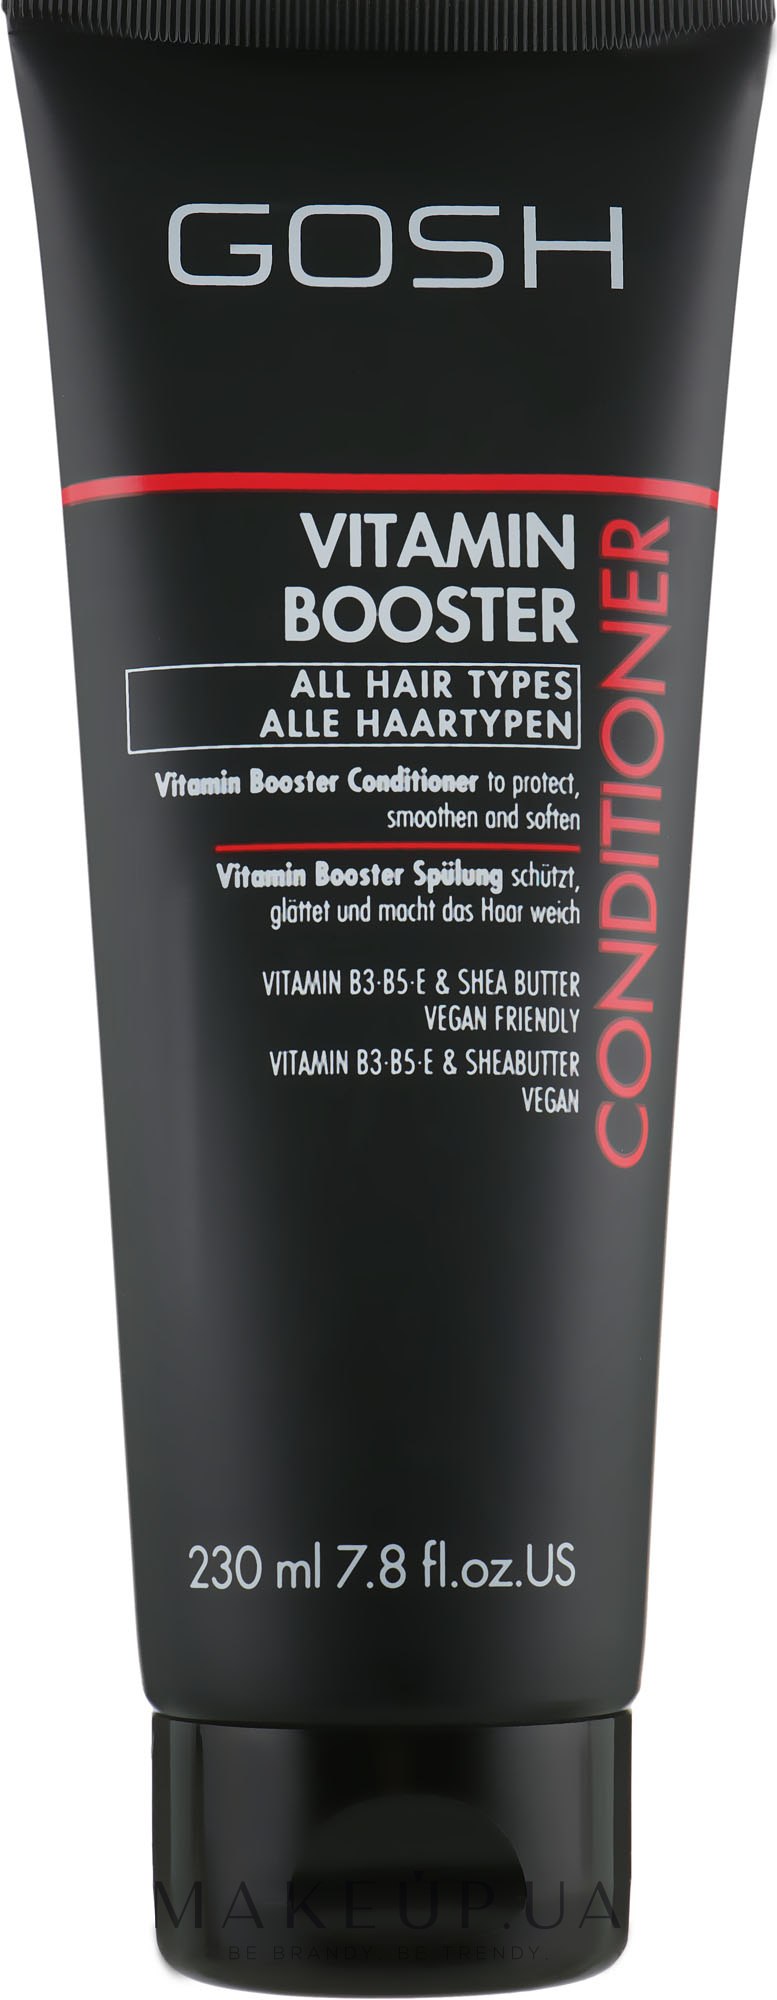 Кондиціонер для волосся  - Gosh Vitamin Booster Conditioner — фото 230ml